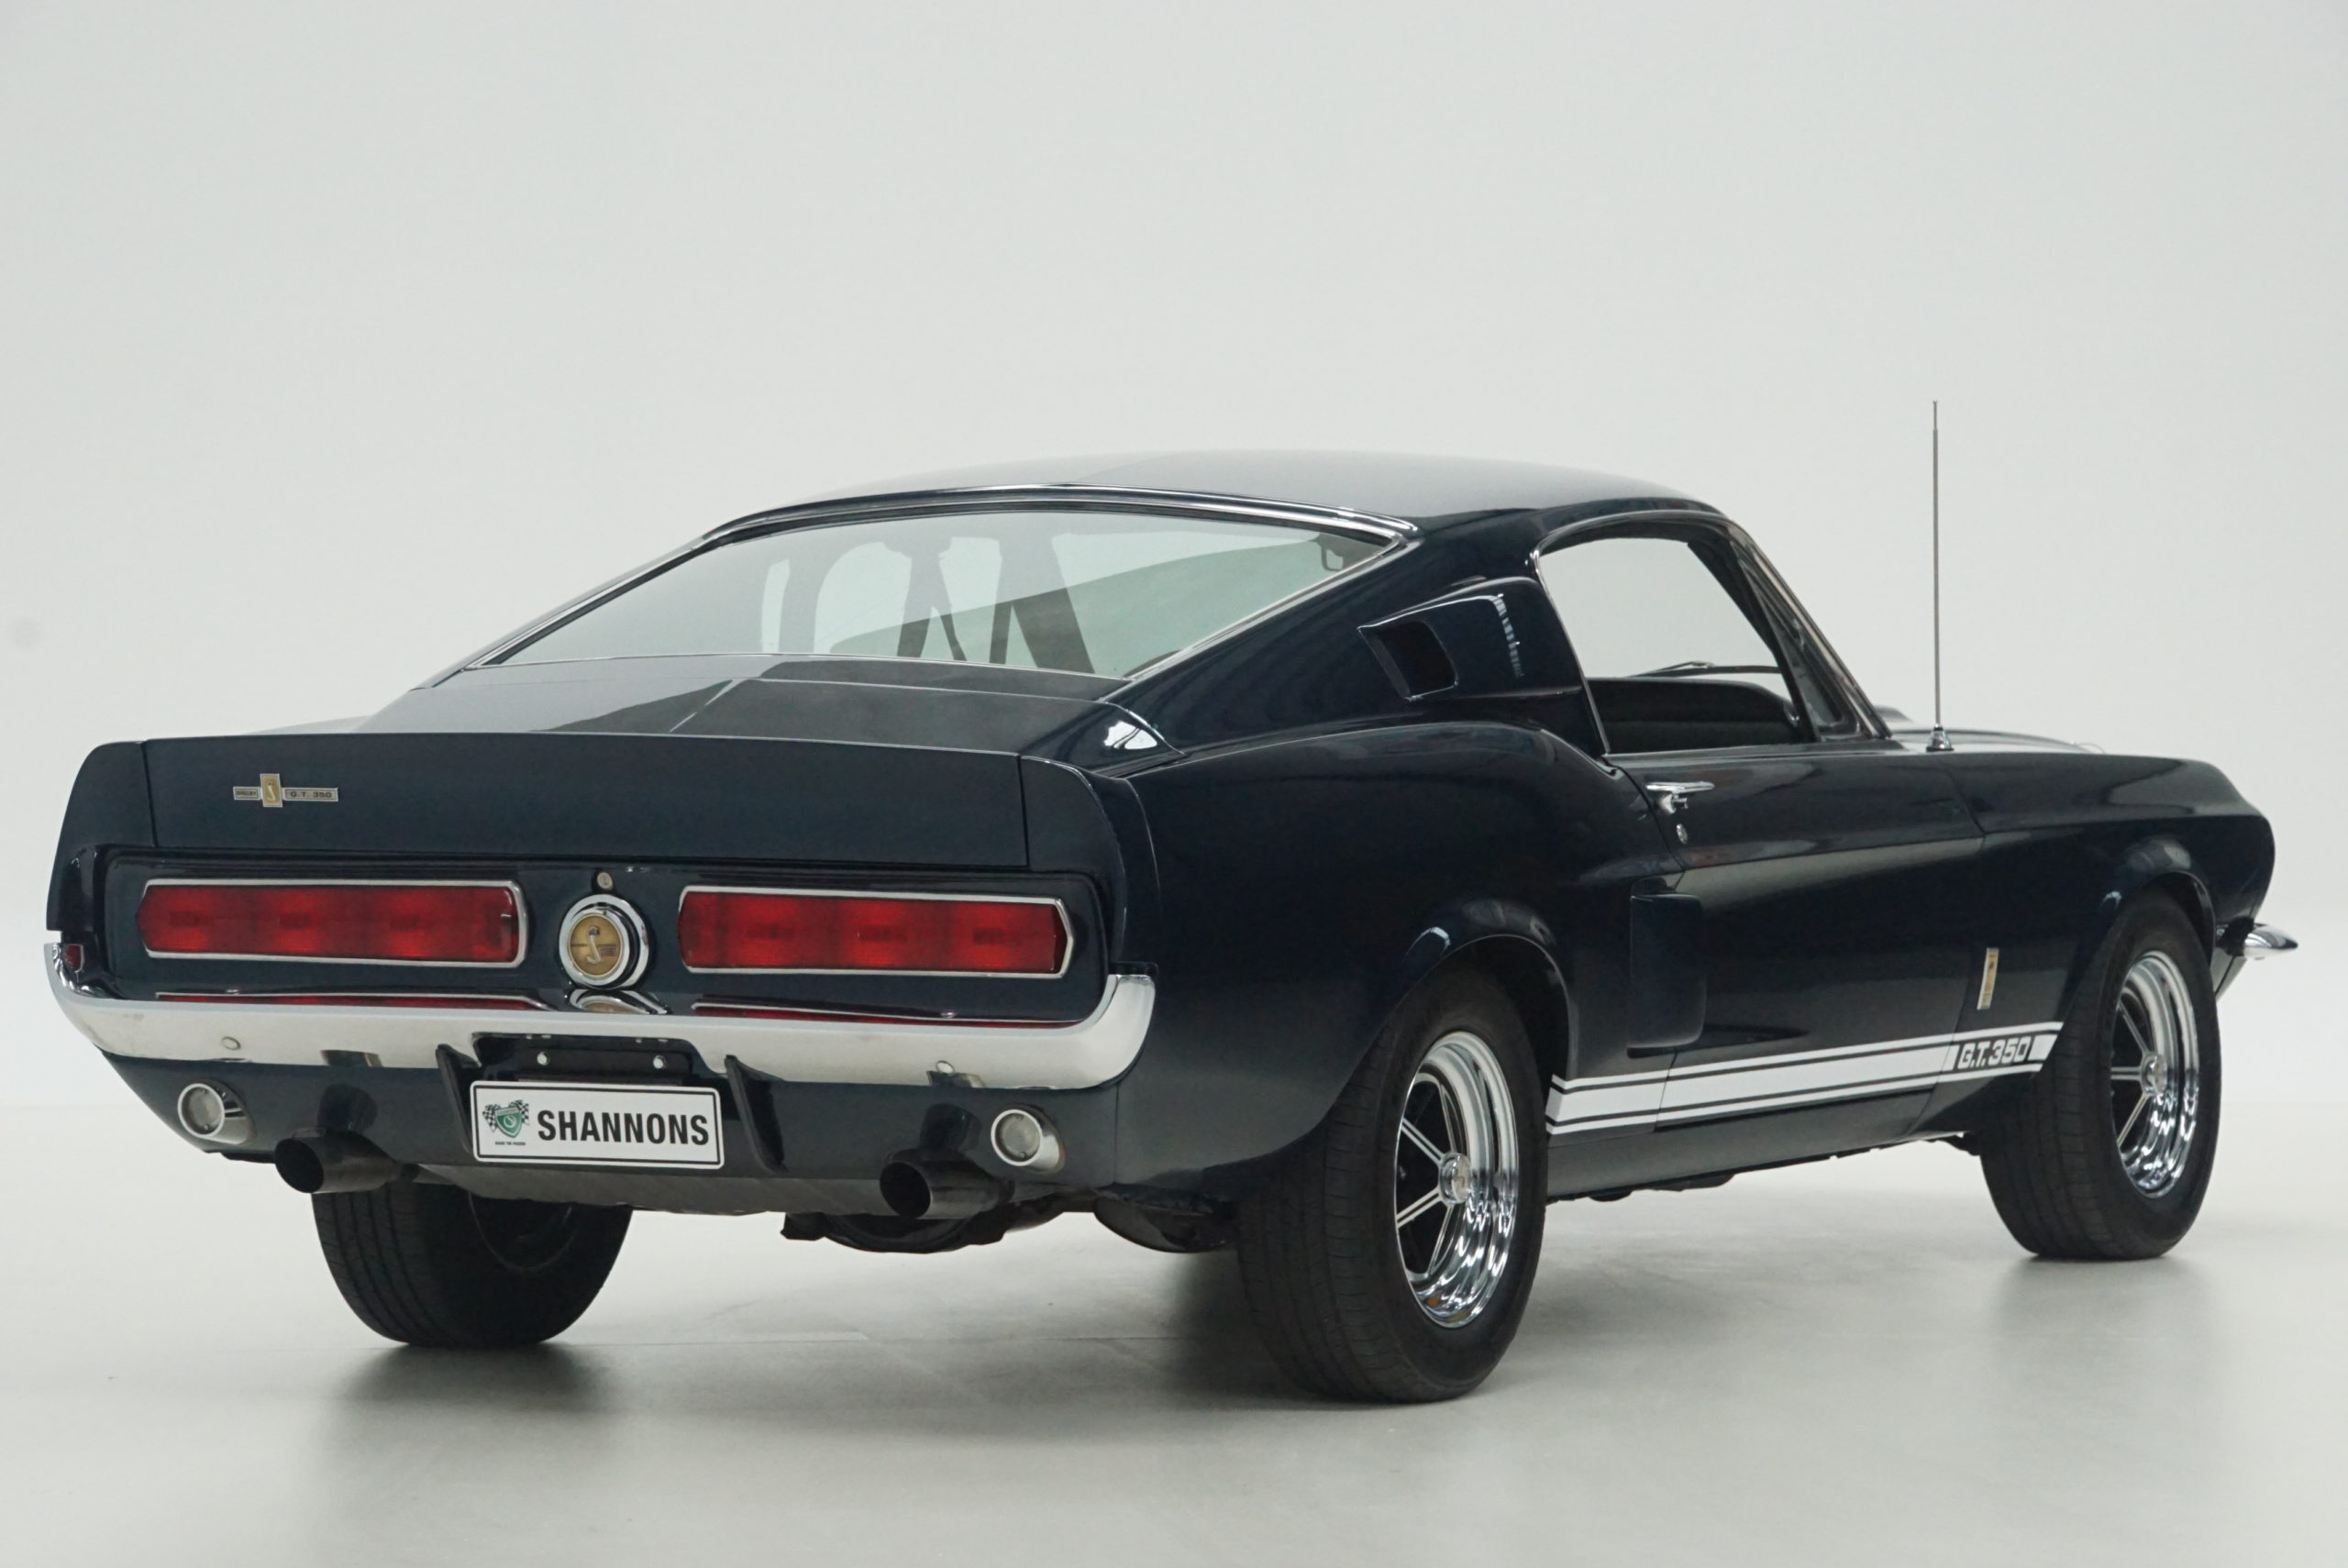 1967 Shelby Mustang GT350 Fastback trois quarts arrière droit - Shannons Auctions avril 2021.